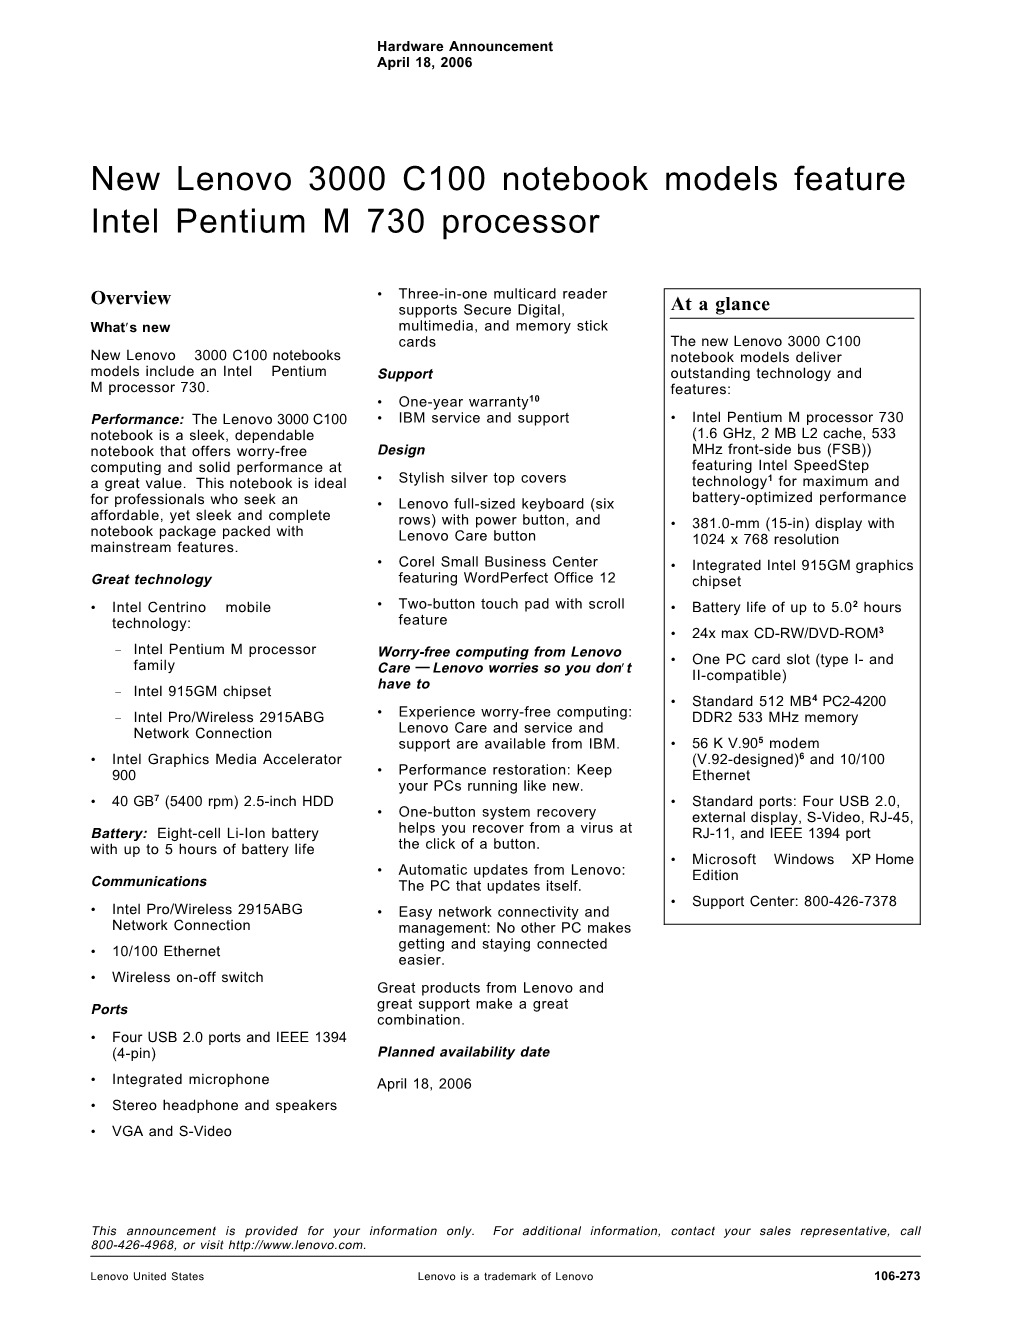 New Lenovo 3000 C100 Notebook Models Feature Intel Pentium M 730 Processor